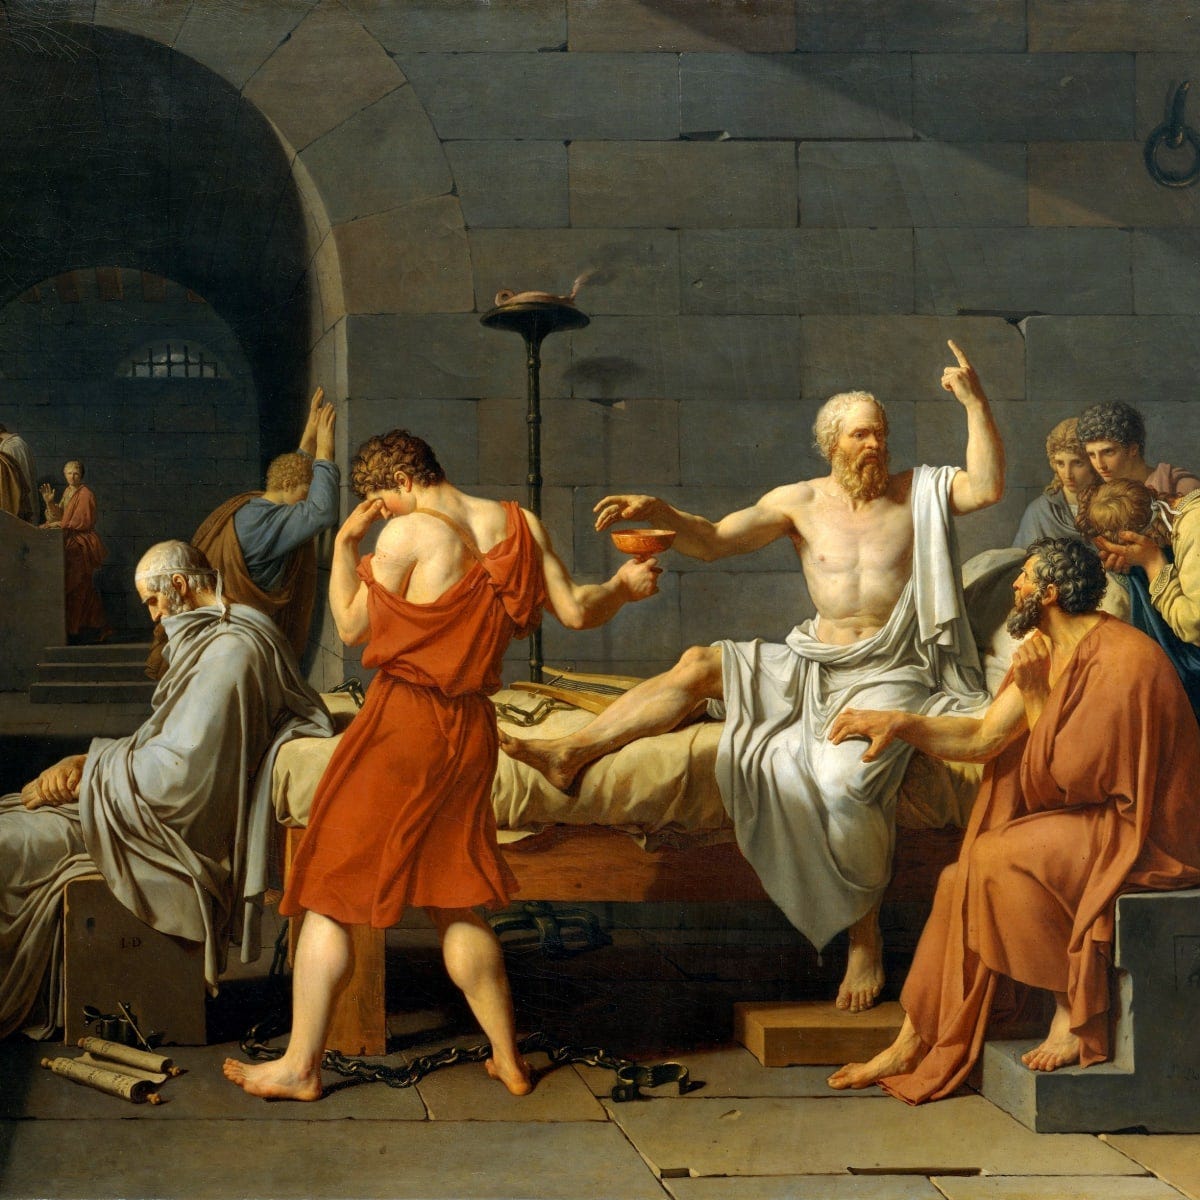 Socrates - Life &amp; Philosophy - HISTORY